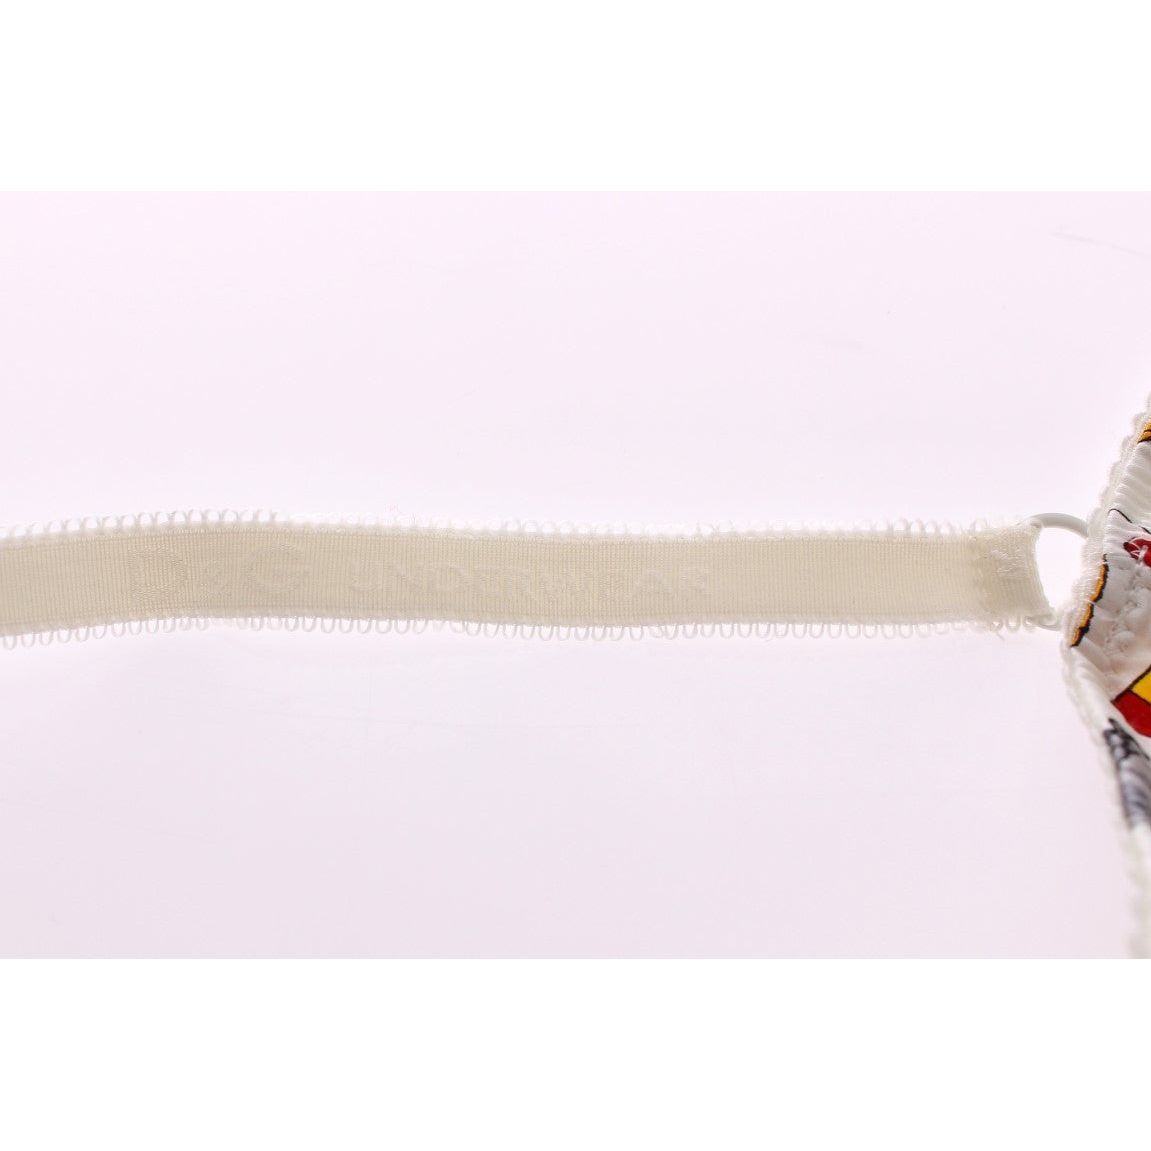 Dolce & Gabbana Elegant White Sailor Print Lingerie Set white-sailor-bra-panty-stretch-underwear